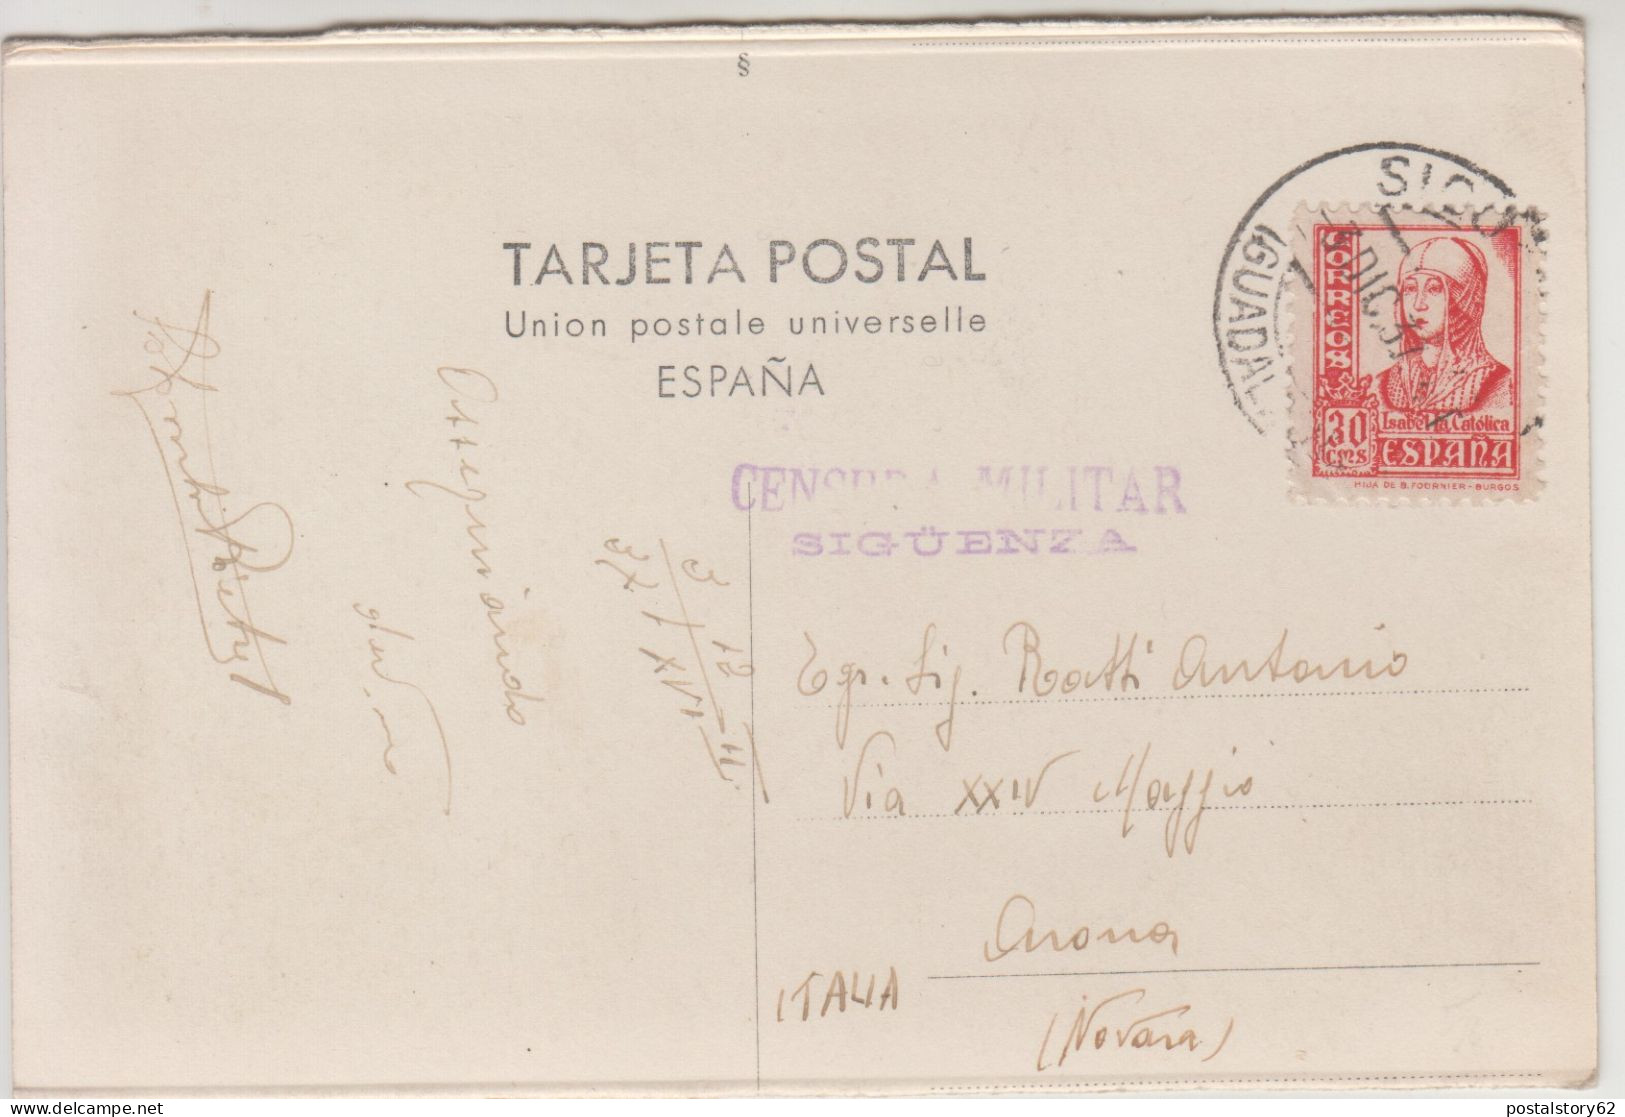 Guerra Di Spagna, Siguenza Per Arona ( Novara )  Con 30 Ct. + Censura Militare. Su Cartolina Postale  03/12/1937 - Marcas De Censura Nacional